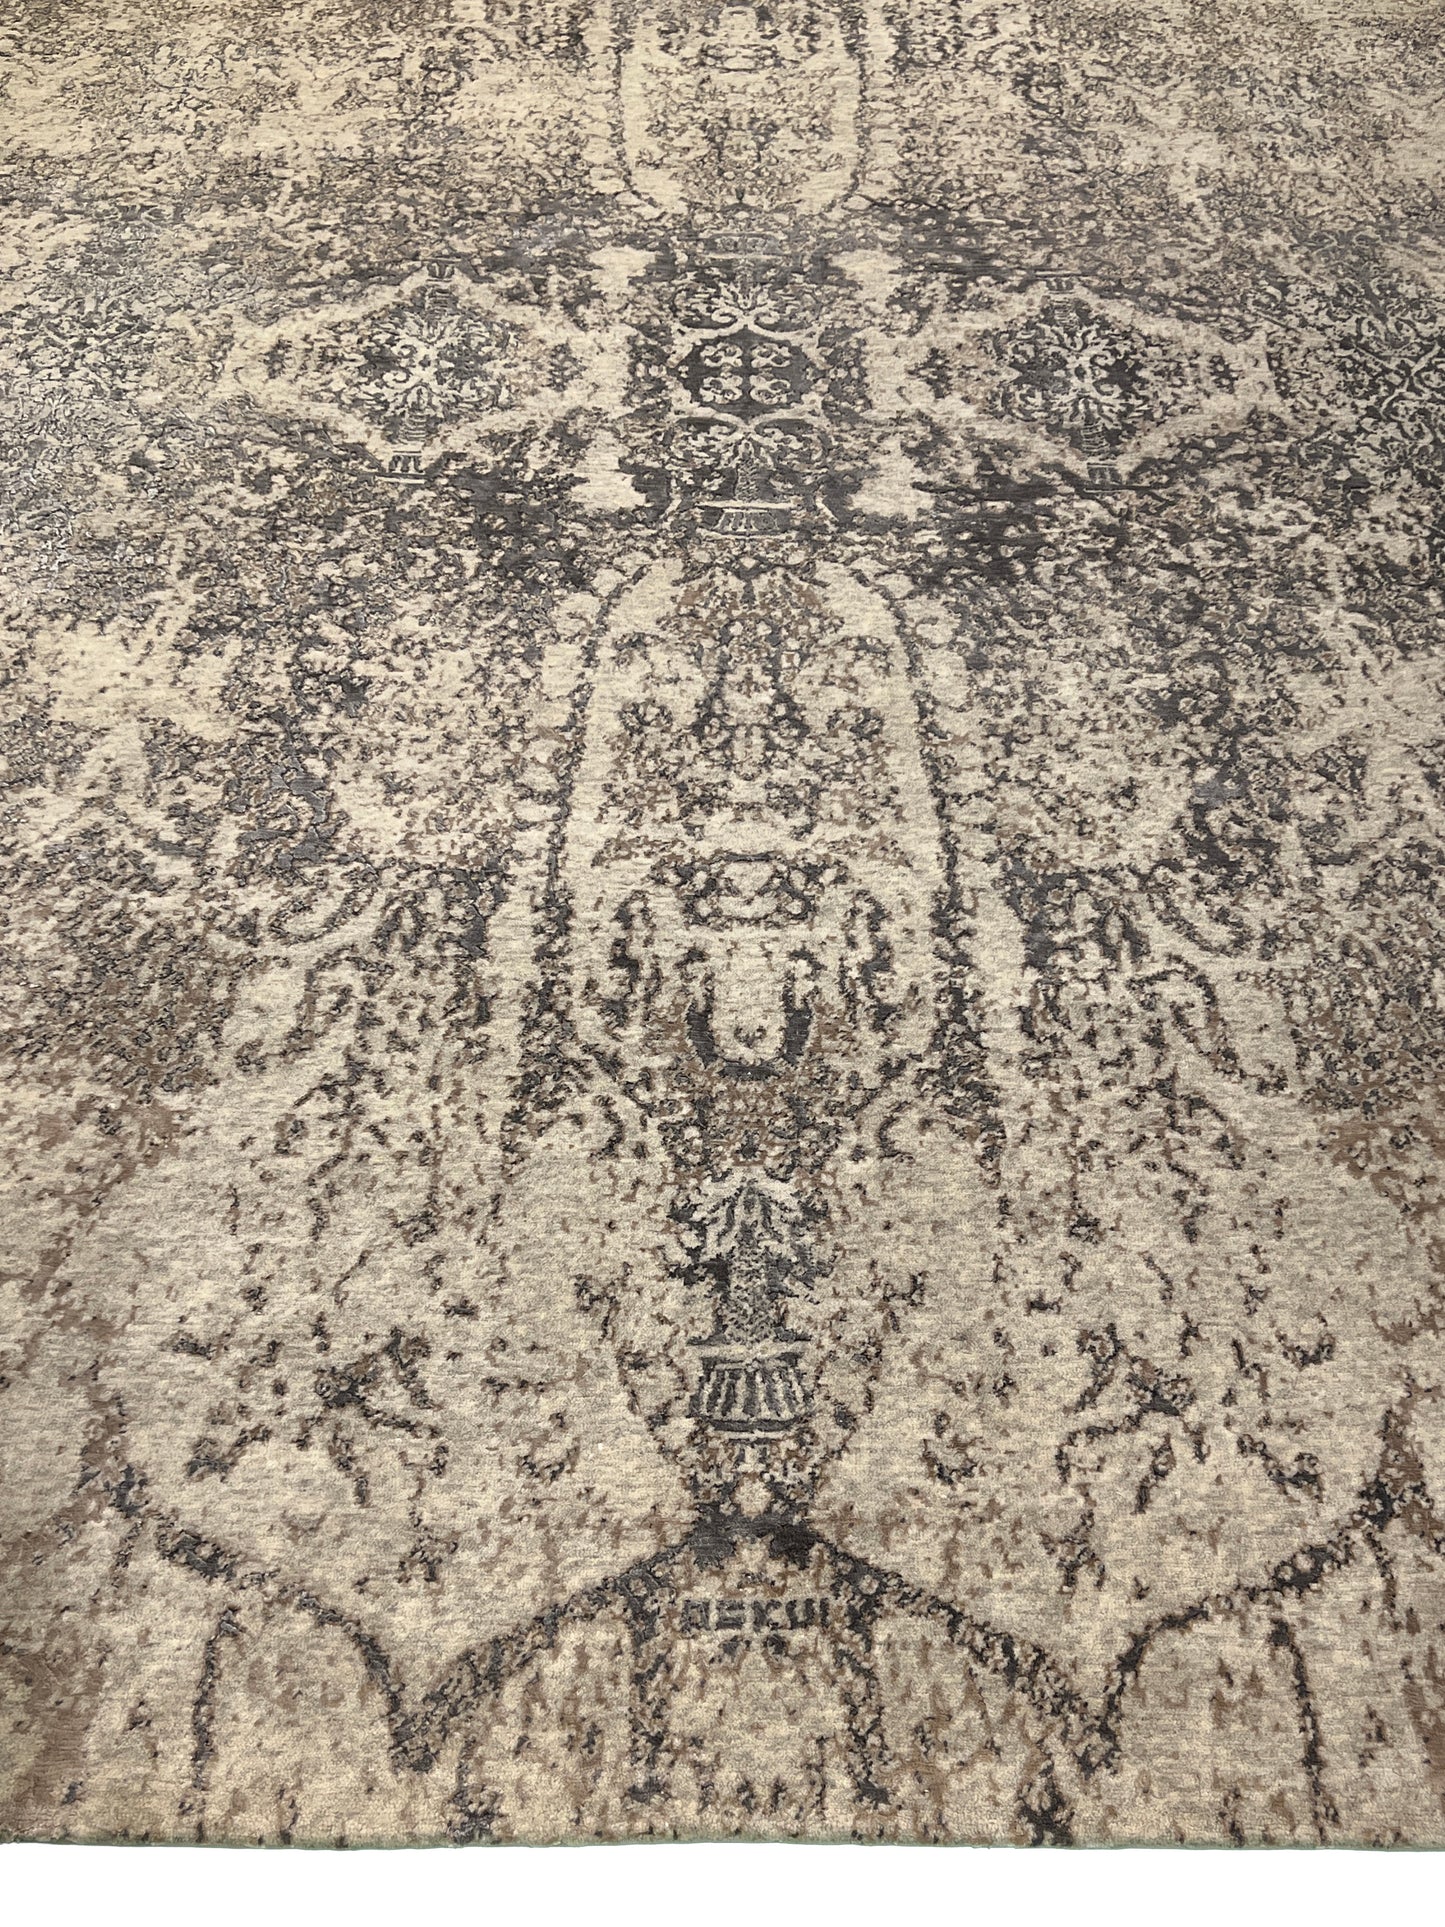 Indian Modern Handwoven Wool Silk Carpet product image #28904312144042